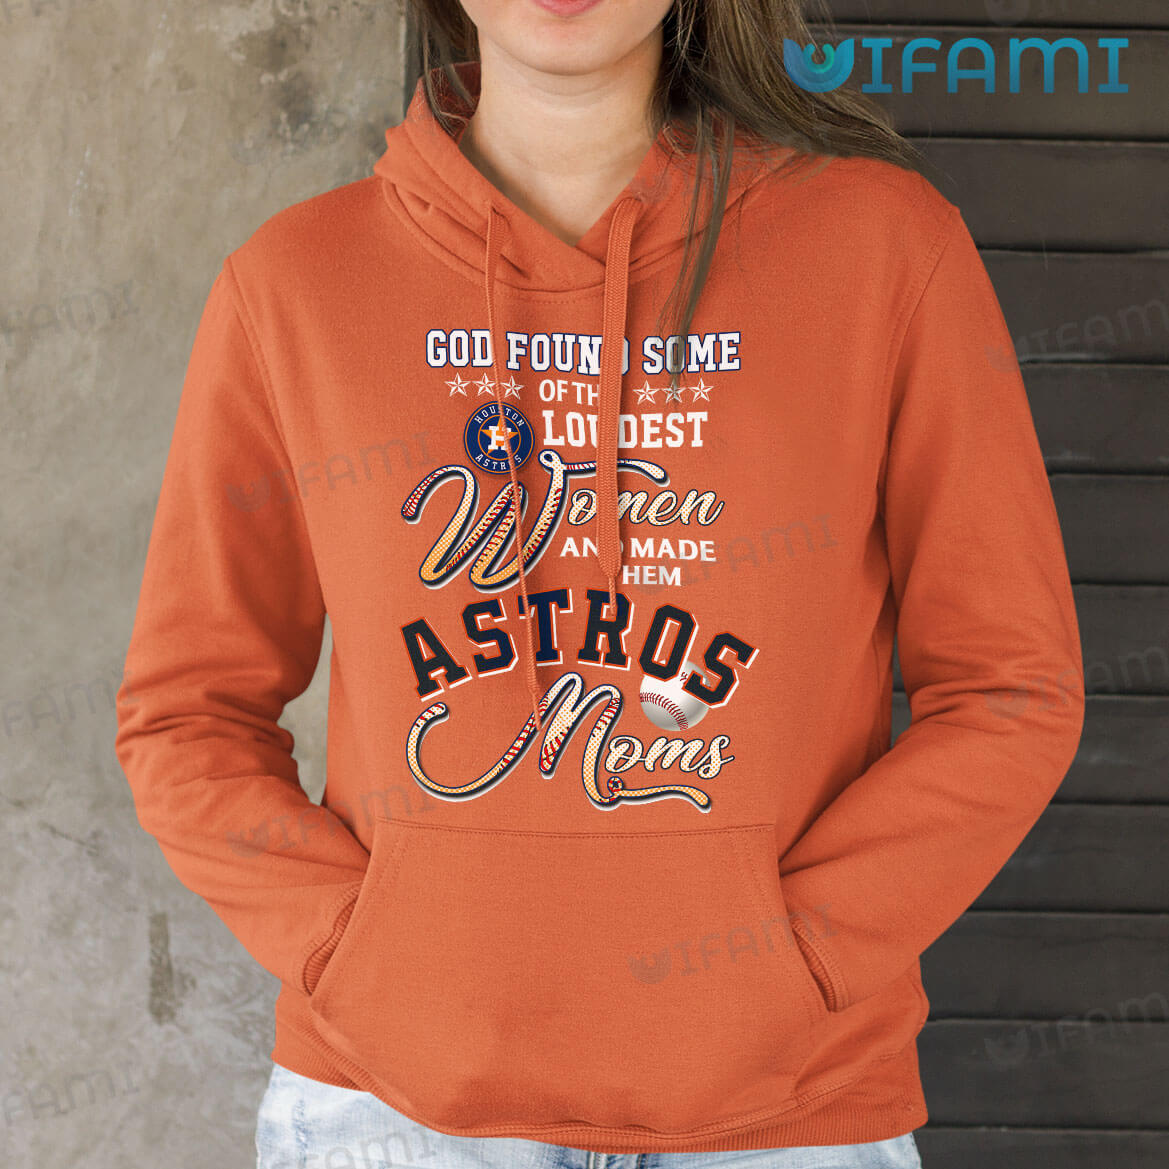 Astros Shirt God Found Loudest Women Made Them Astros Mom Houston Astros Gift